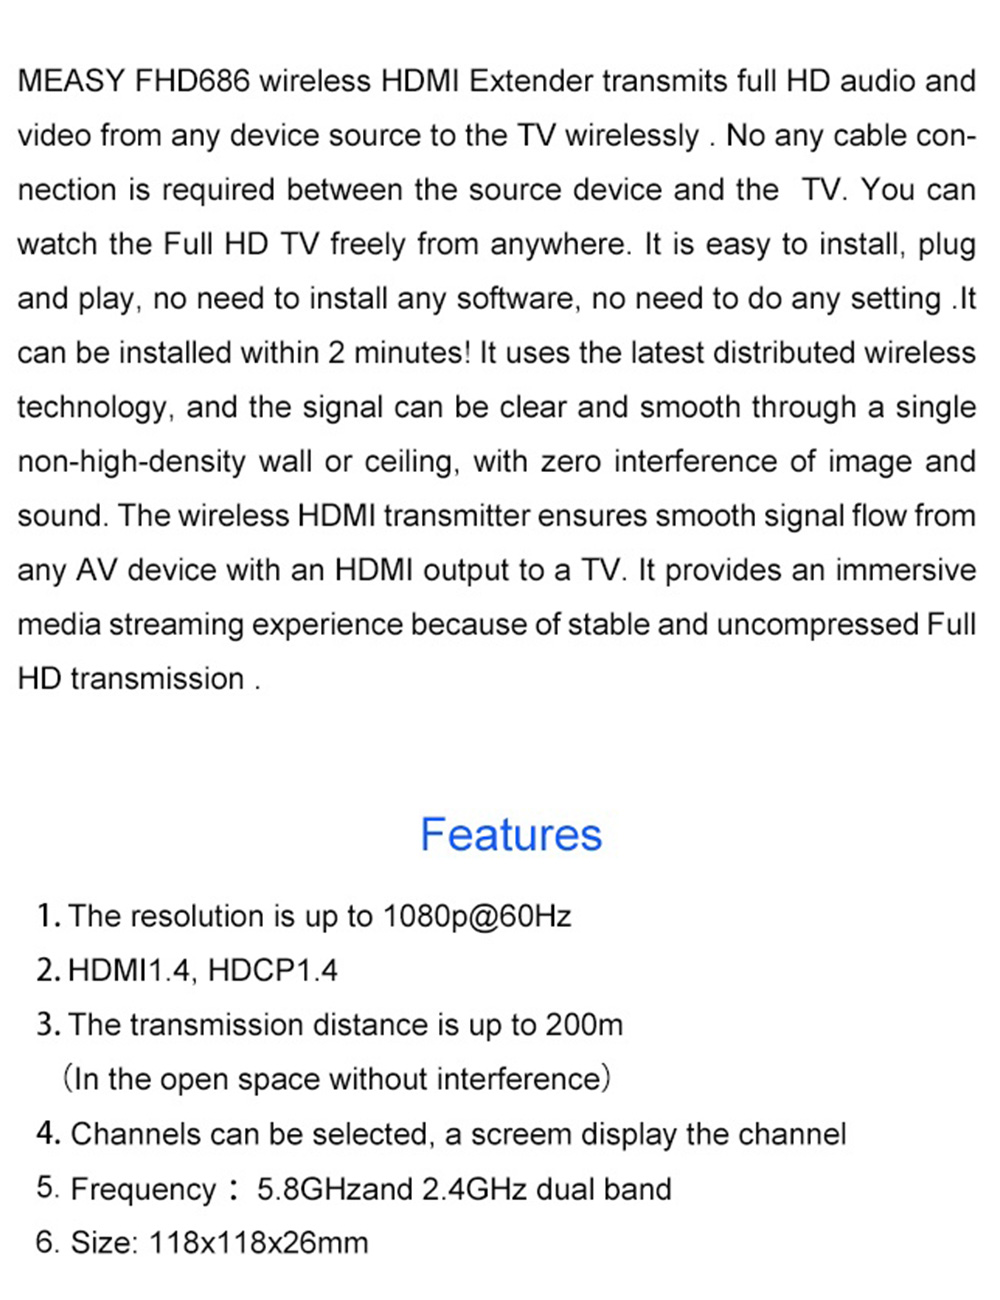 Measy FHD686 Wireless HDMI Extender 1080P HD 5.8G 200M AV TV HD Audio Video Sender Transmitter Receiver EU Plug - Black